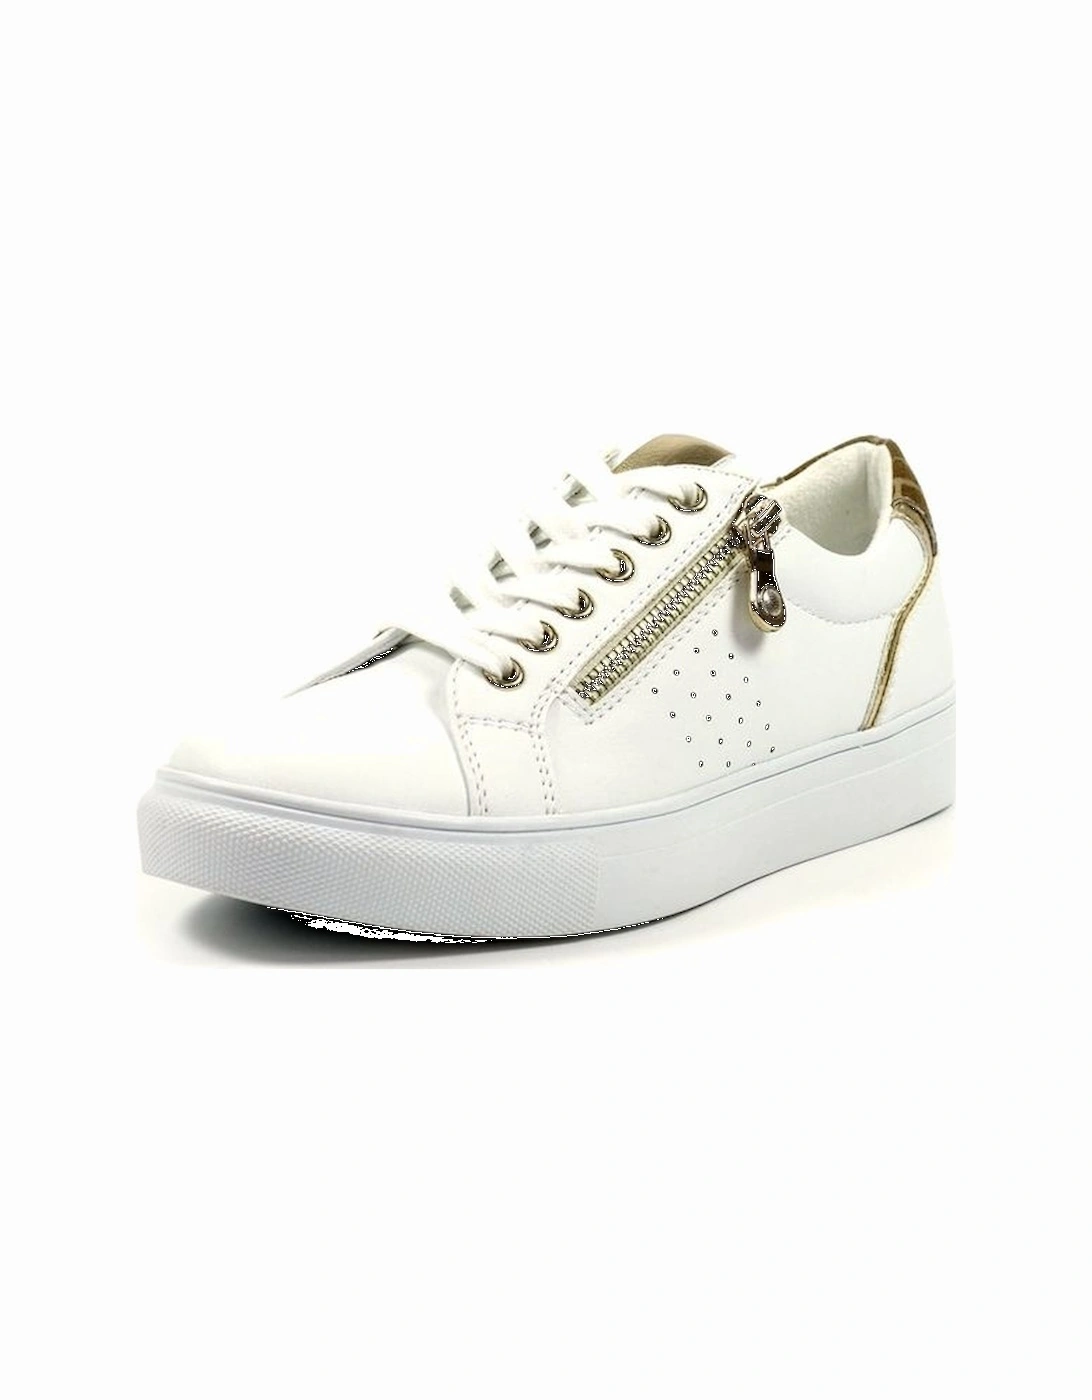 Shoes Senator DLB 035 white, 2 of 1